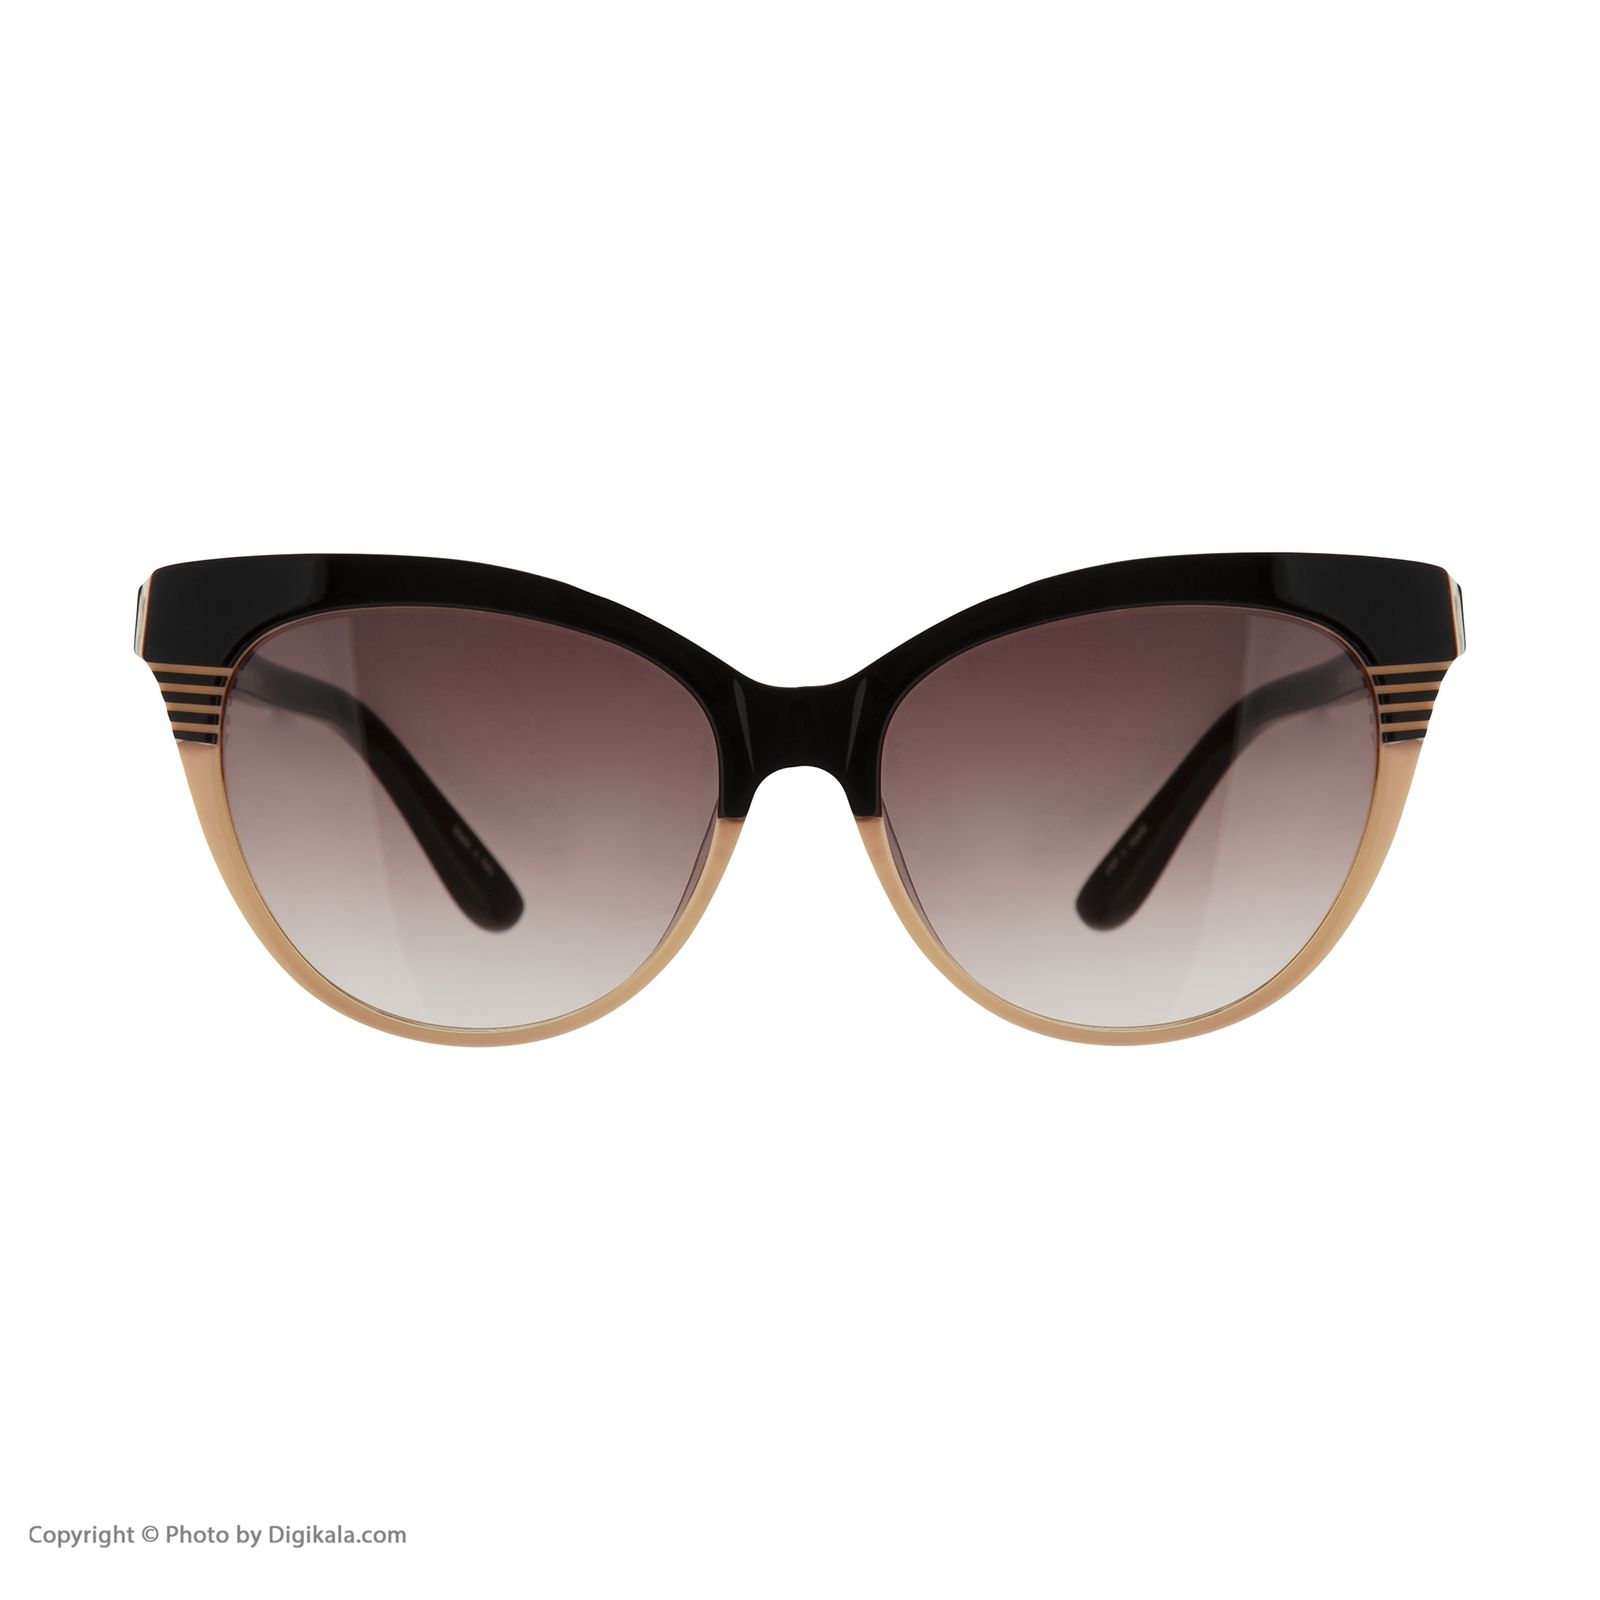  عینک آفتابی مارک جکوبس مدل 390 -  - 5